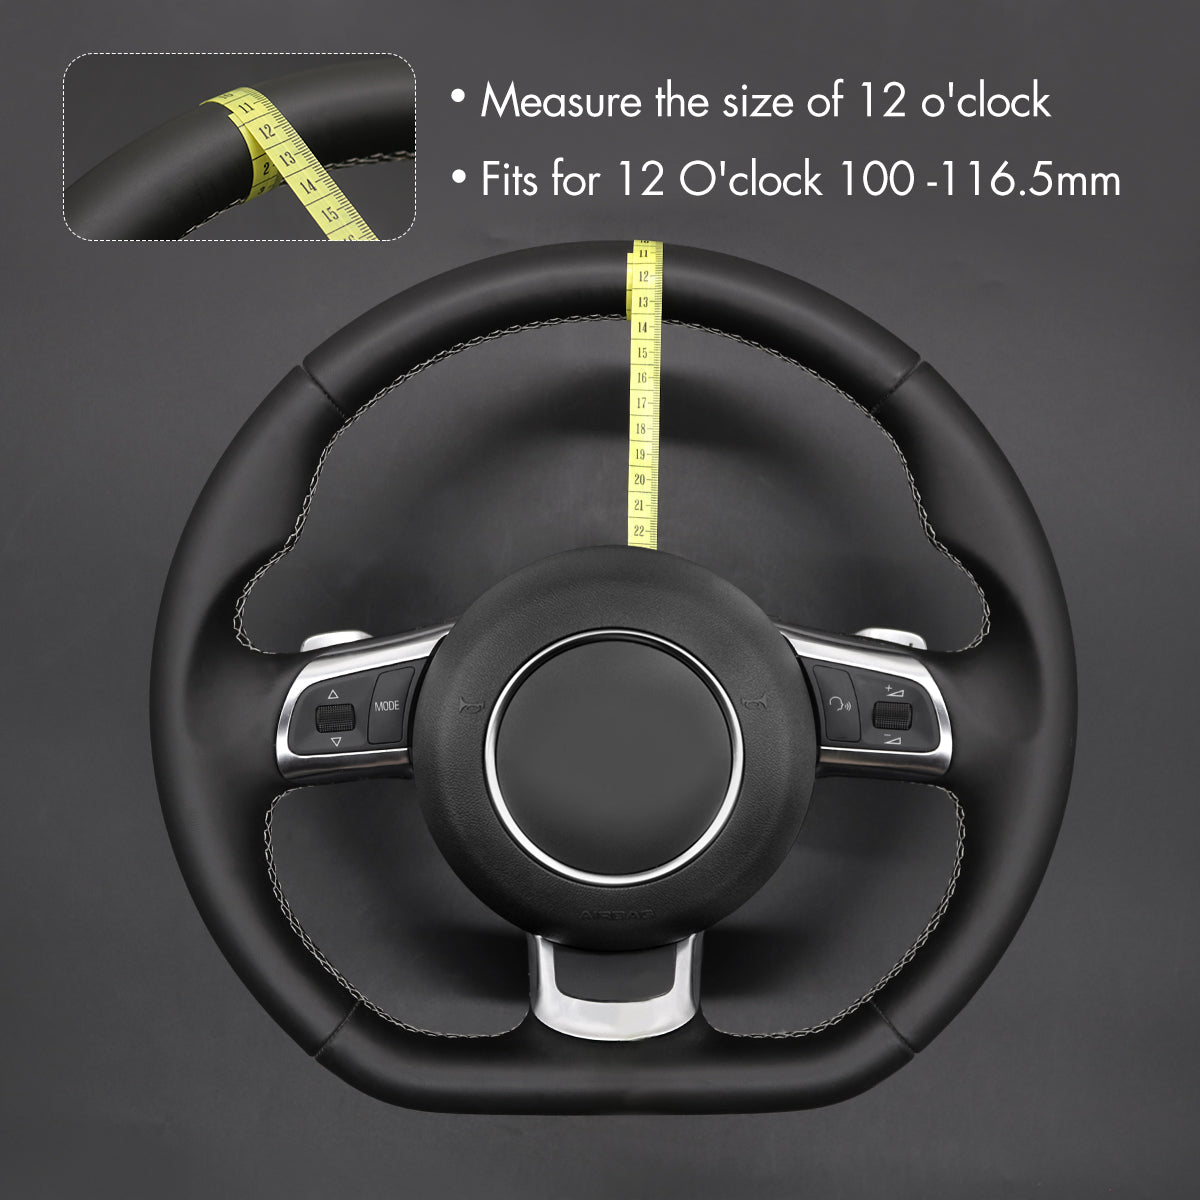 MEWANT Alcantara Universal Car Steering Wheel Cover for Most Volkswagen VW BMW Audi Toyota Honda...